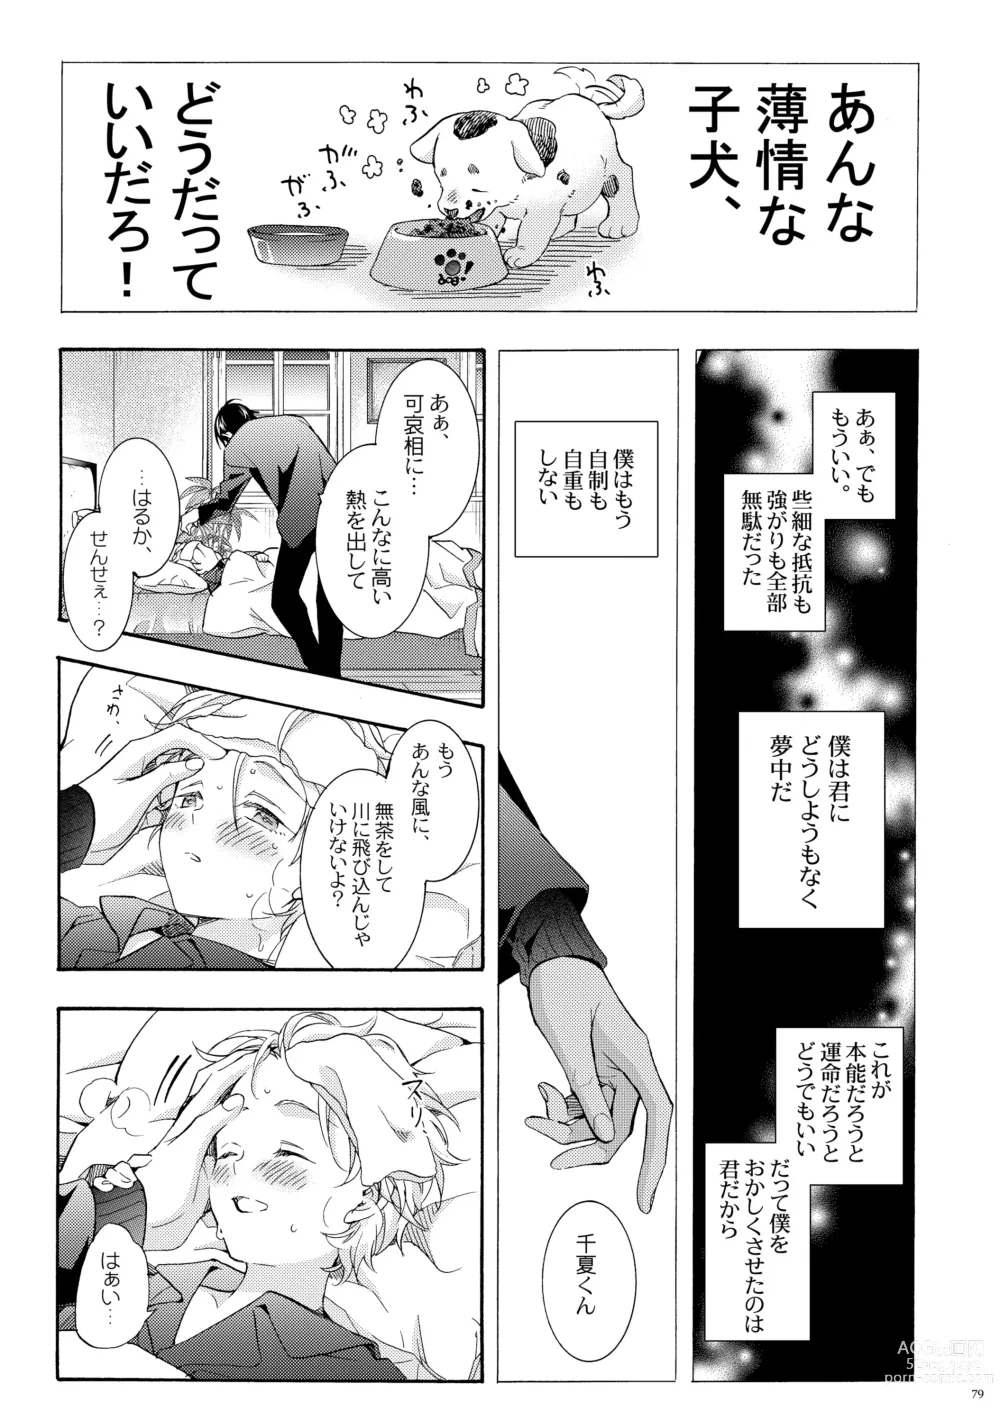 Page 78 of manga Boku no Tame no Omega